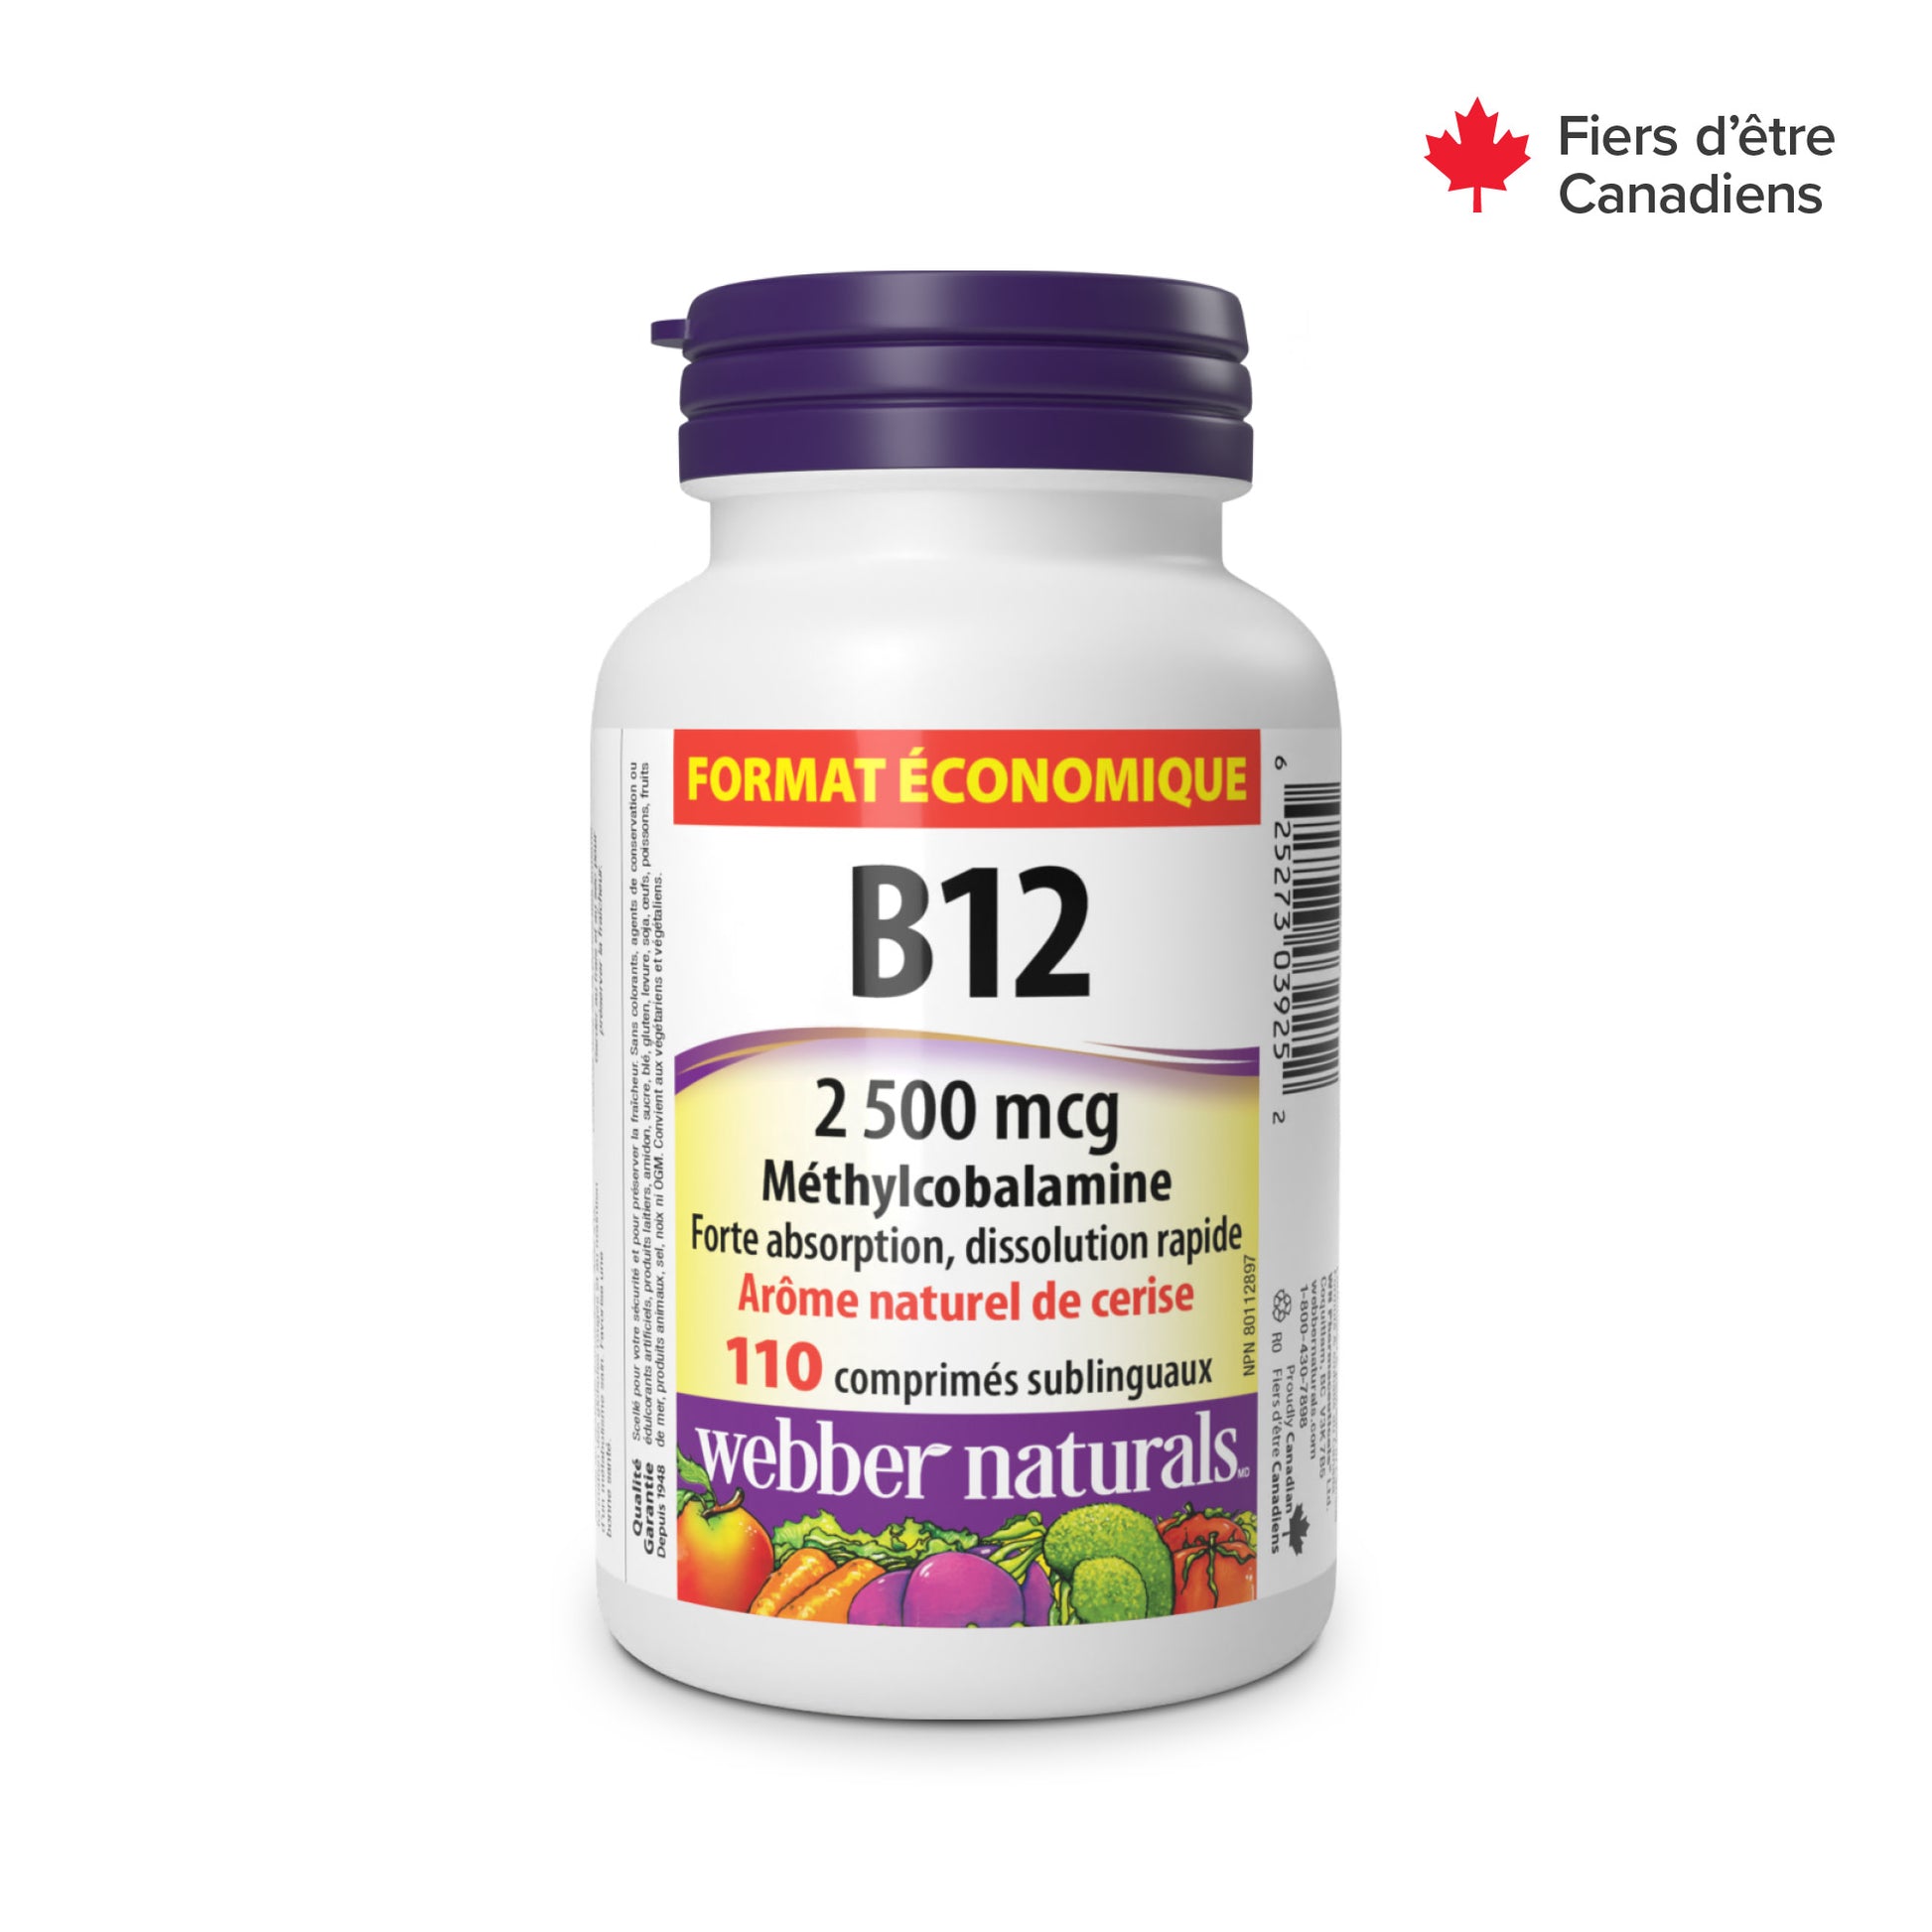 Vitamin B12 Methylcobalamin 2500 mcg for Webber Naturals|v|hi-res|WN3925